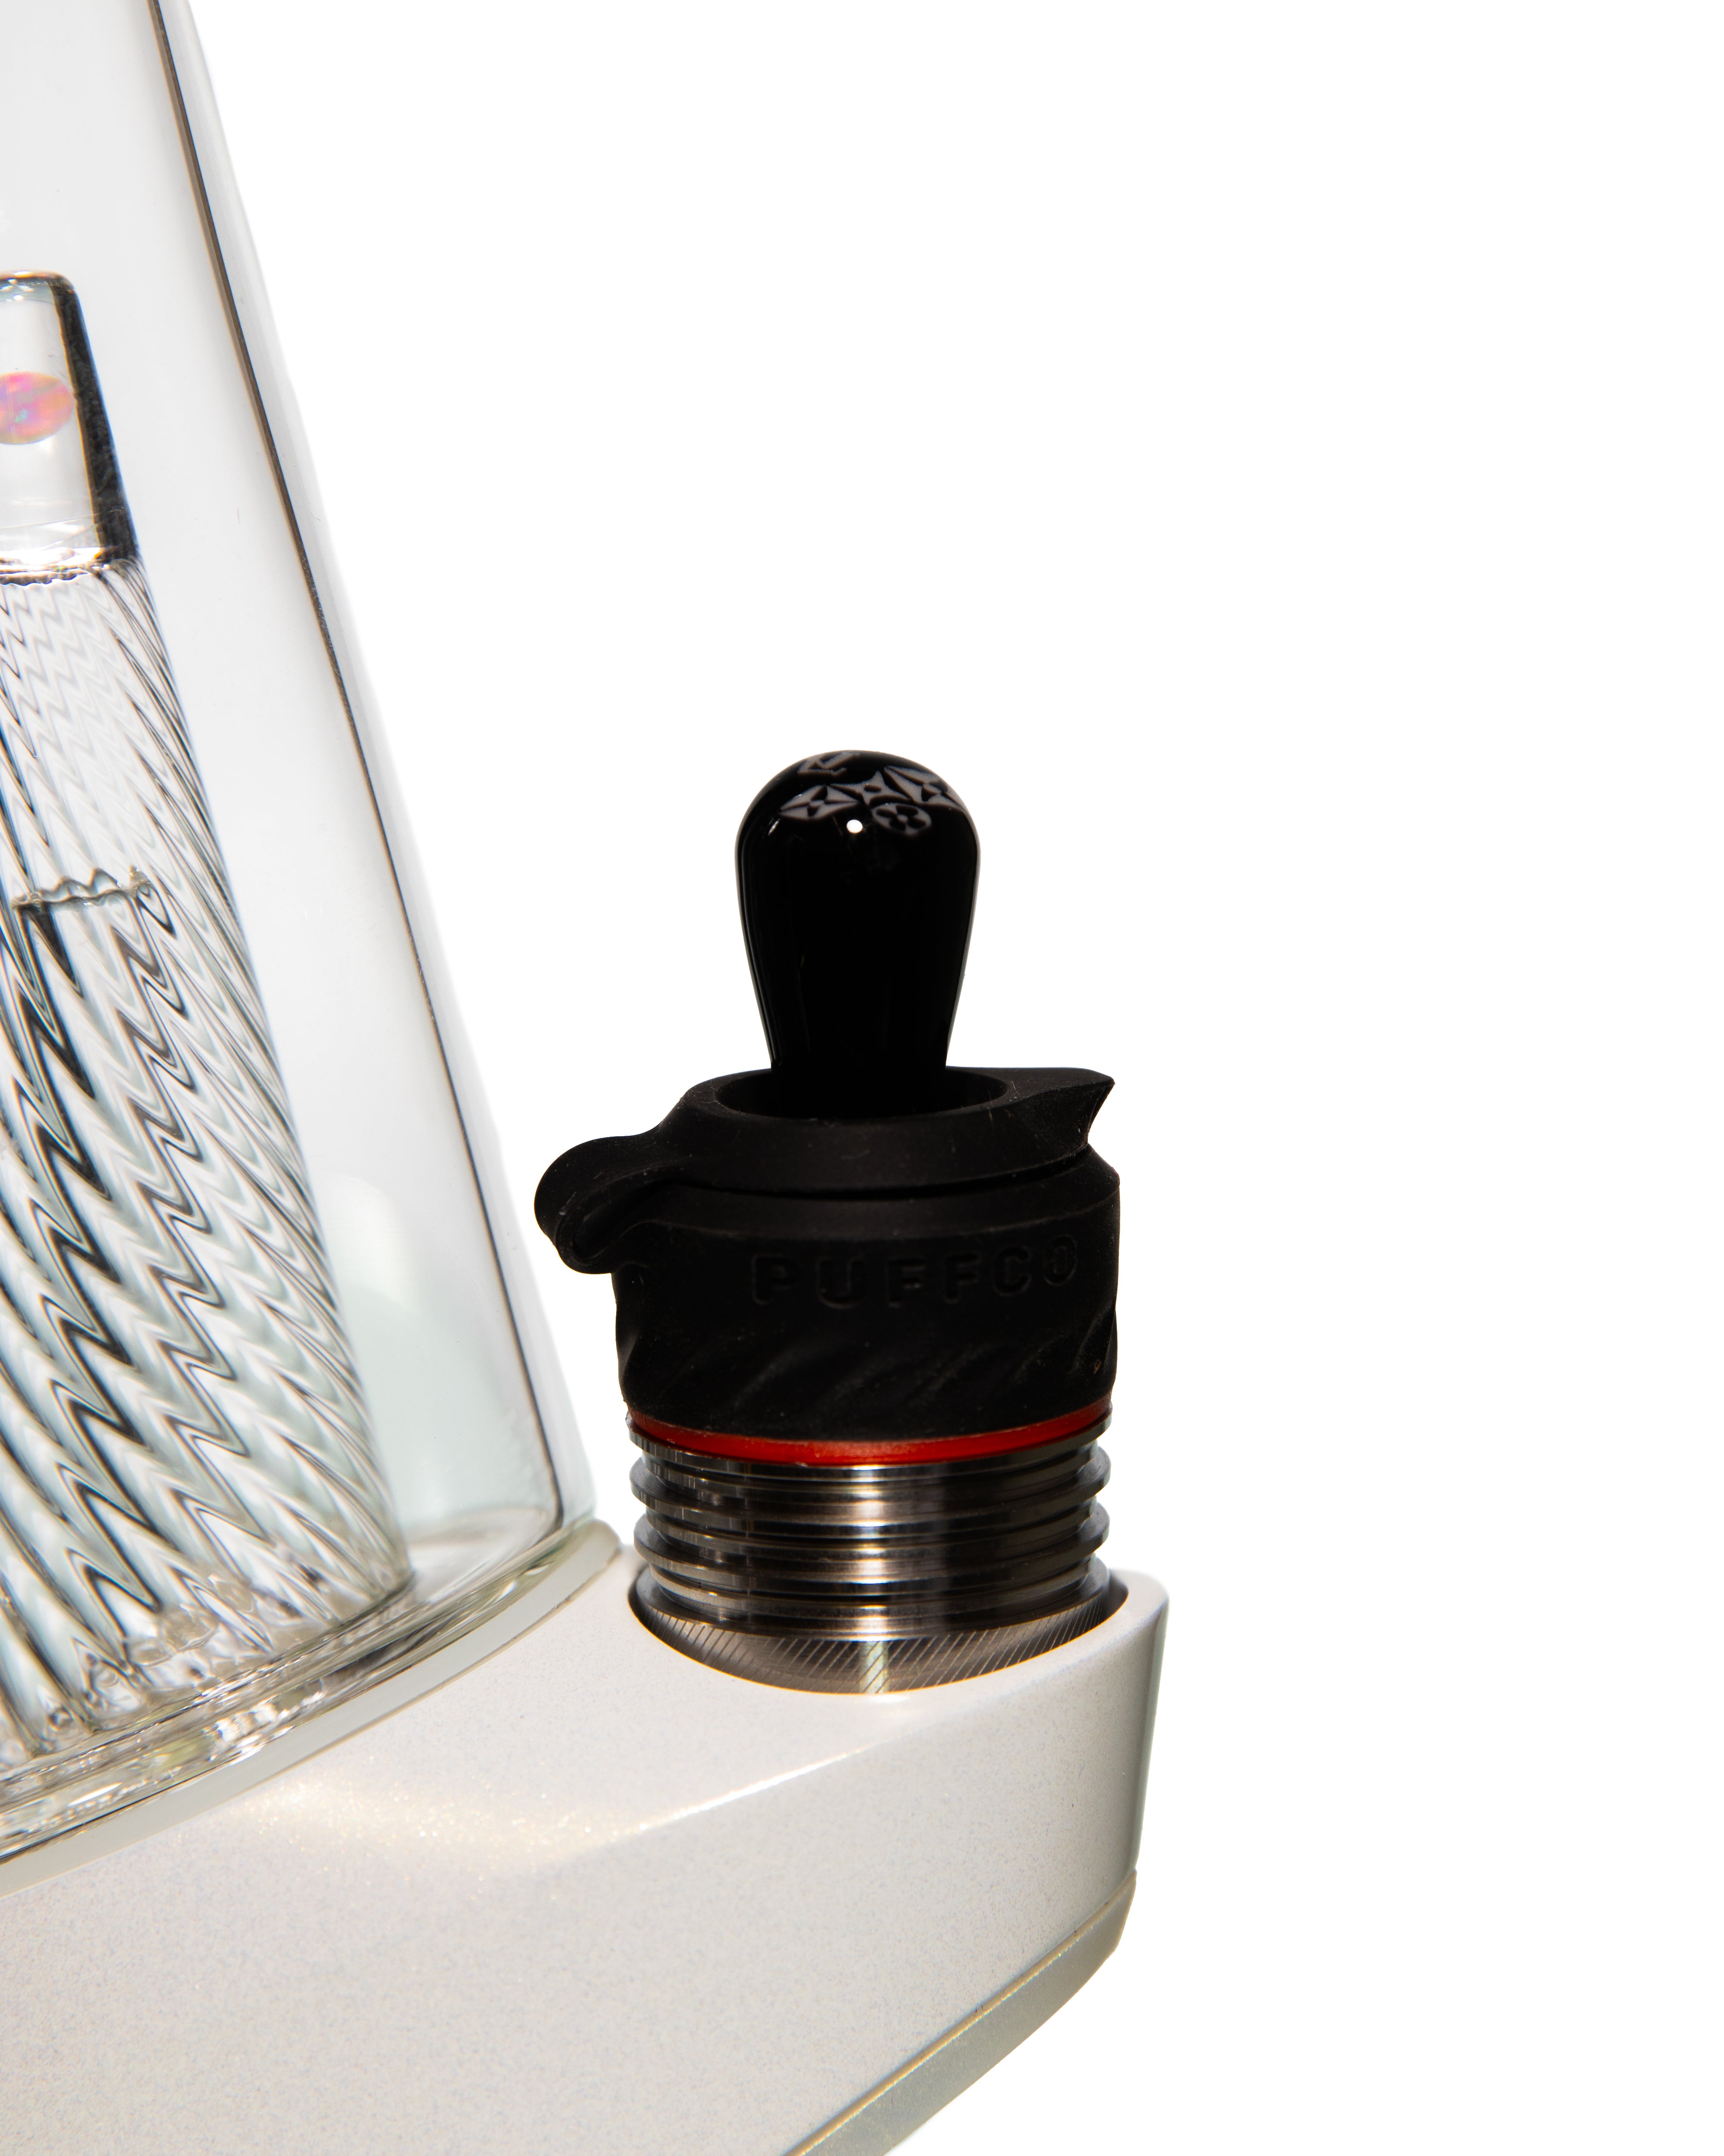 Steve Hulsebos Glass - Puffco Plug 13mm (Black and White LV Symbols)